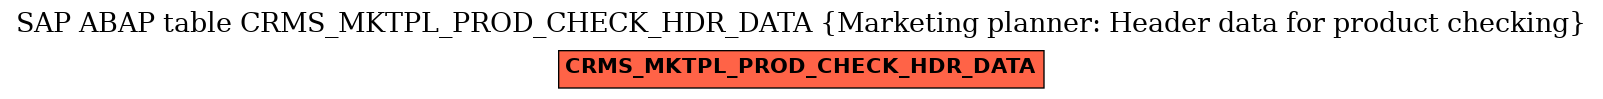 E-R Diagram for table CRMS_MKTPL_PROD_CHECK_HDR_DATA (Marketing planner: Header data for product checking)